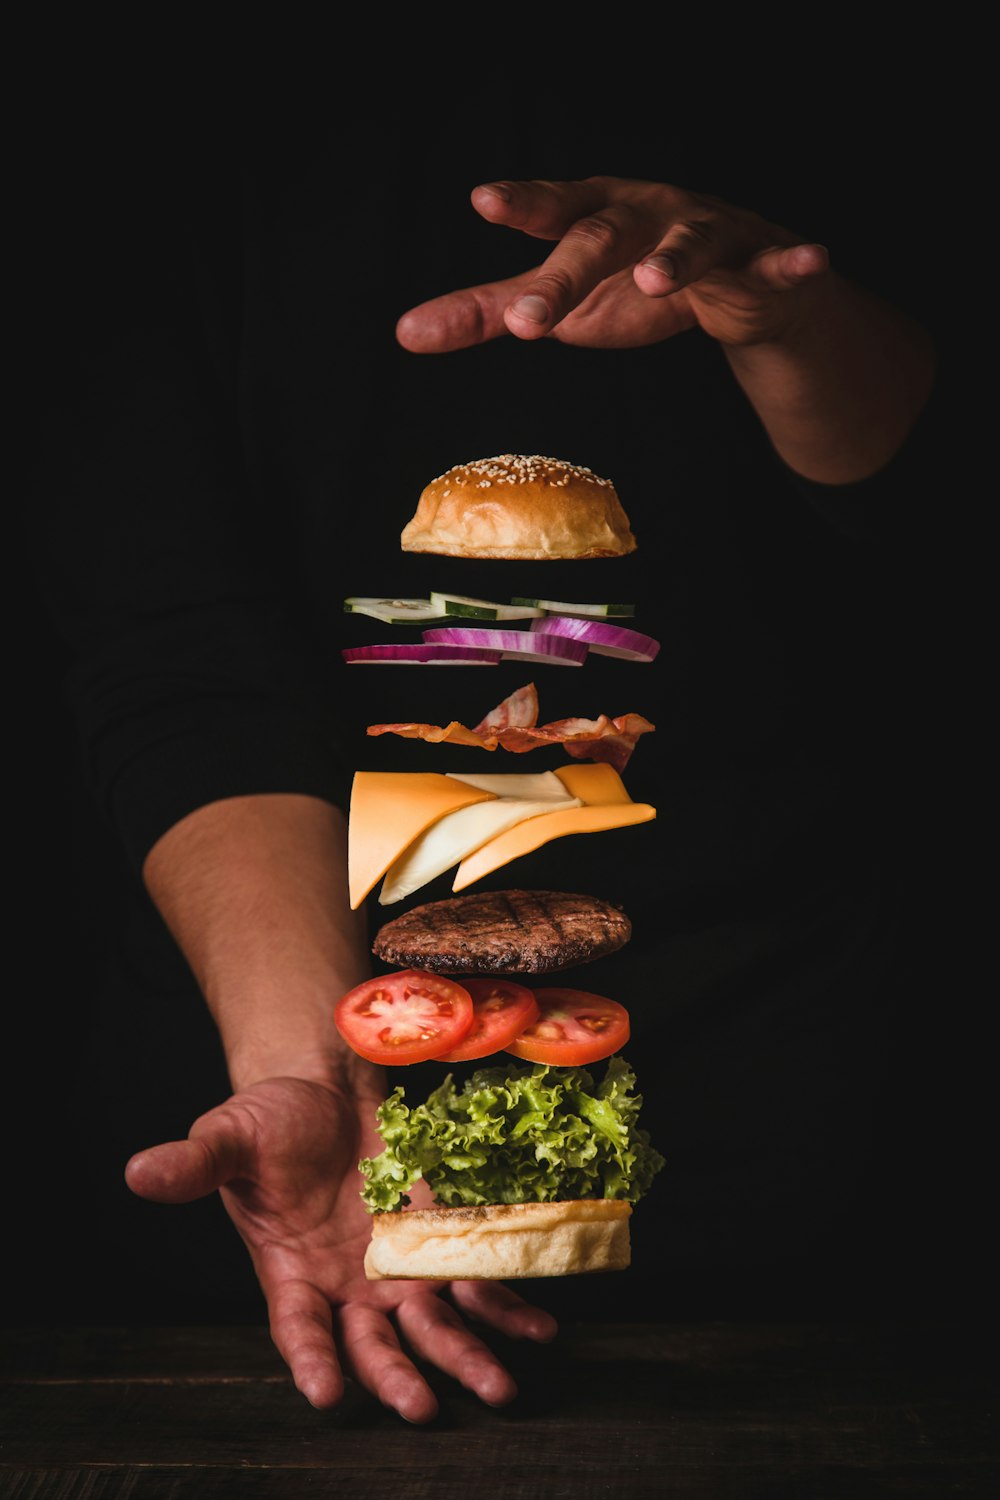 timelapse photo of man holding burger